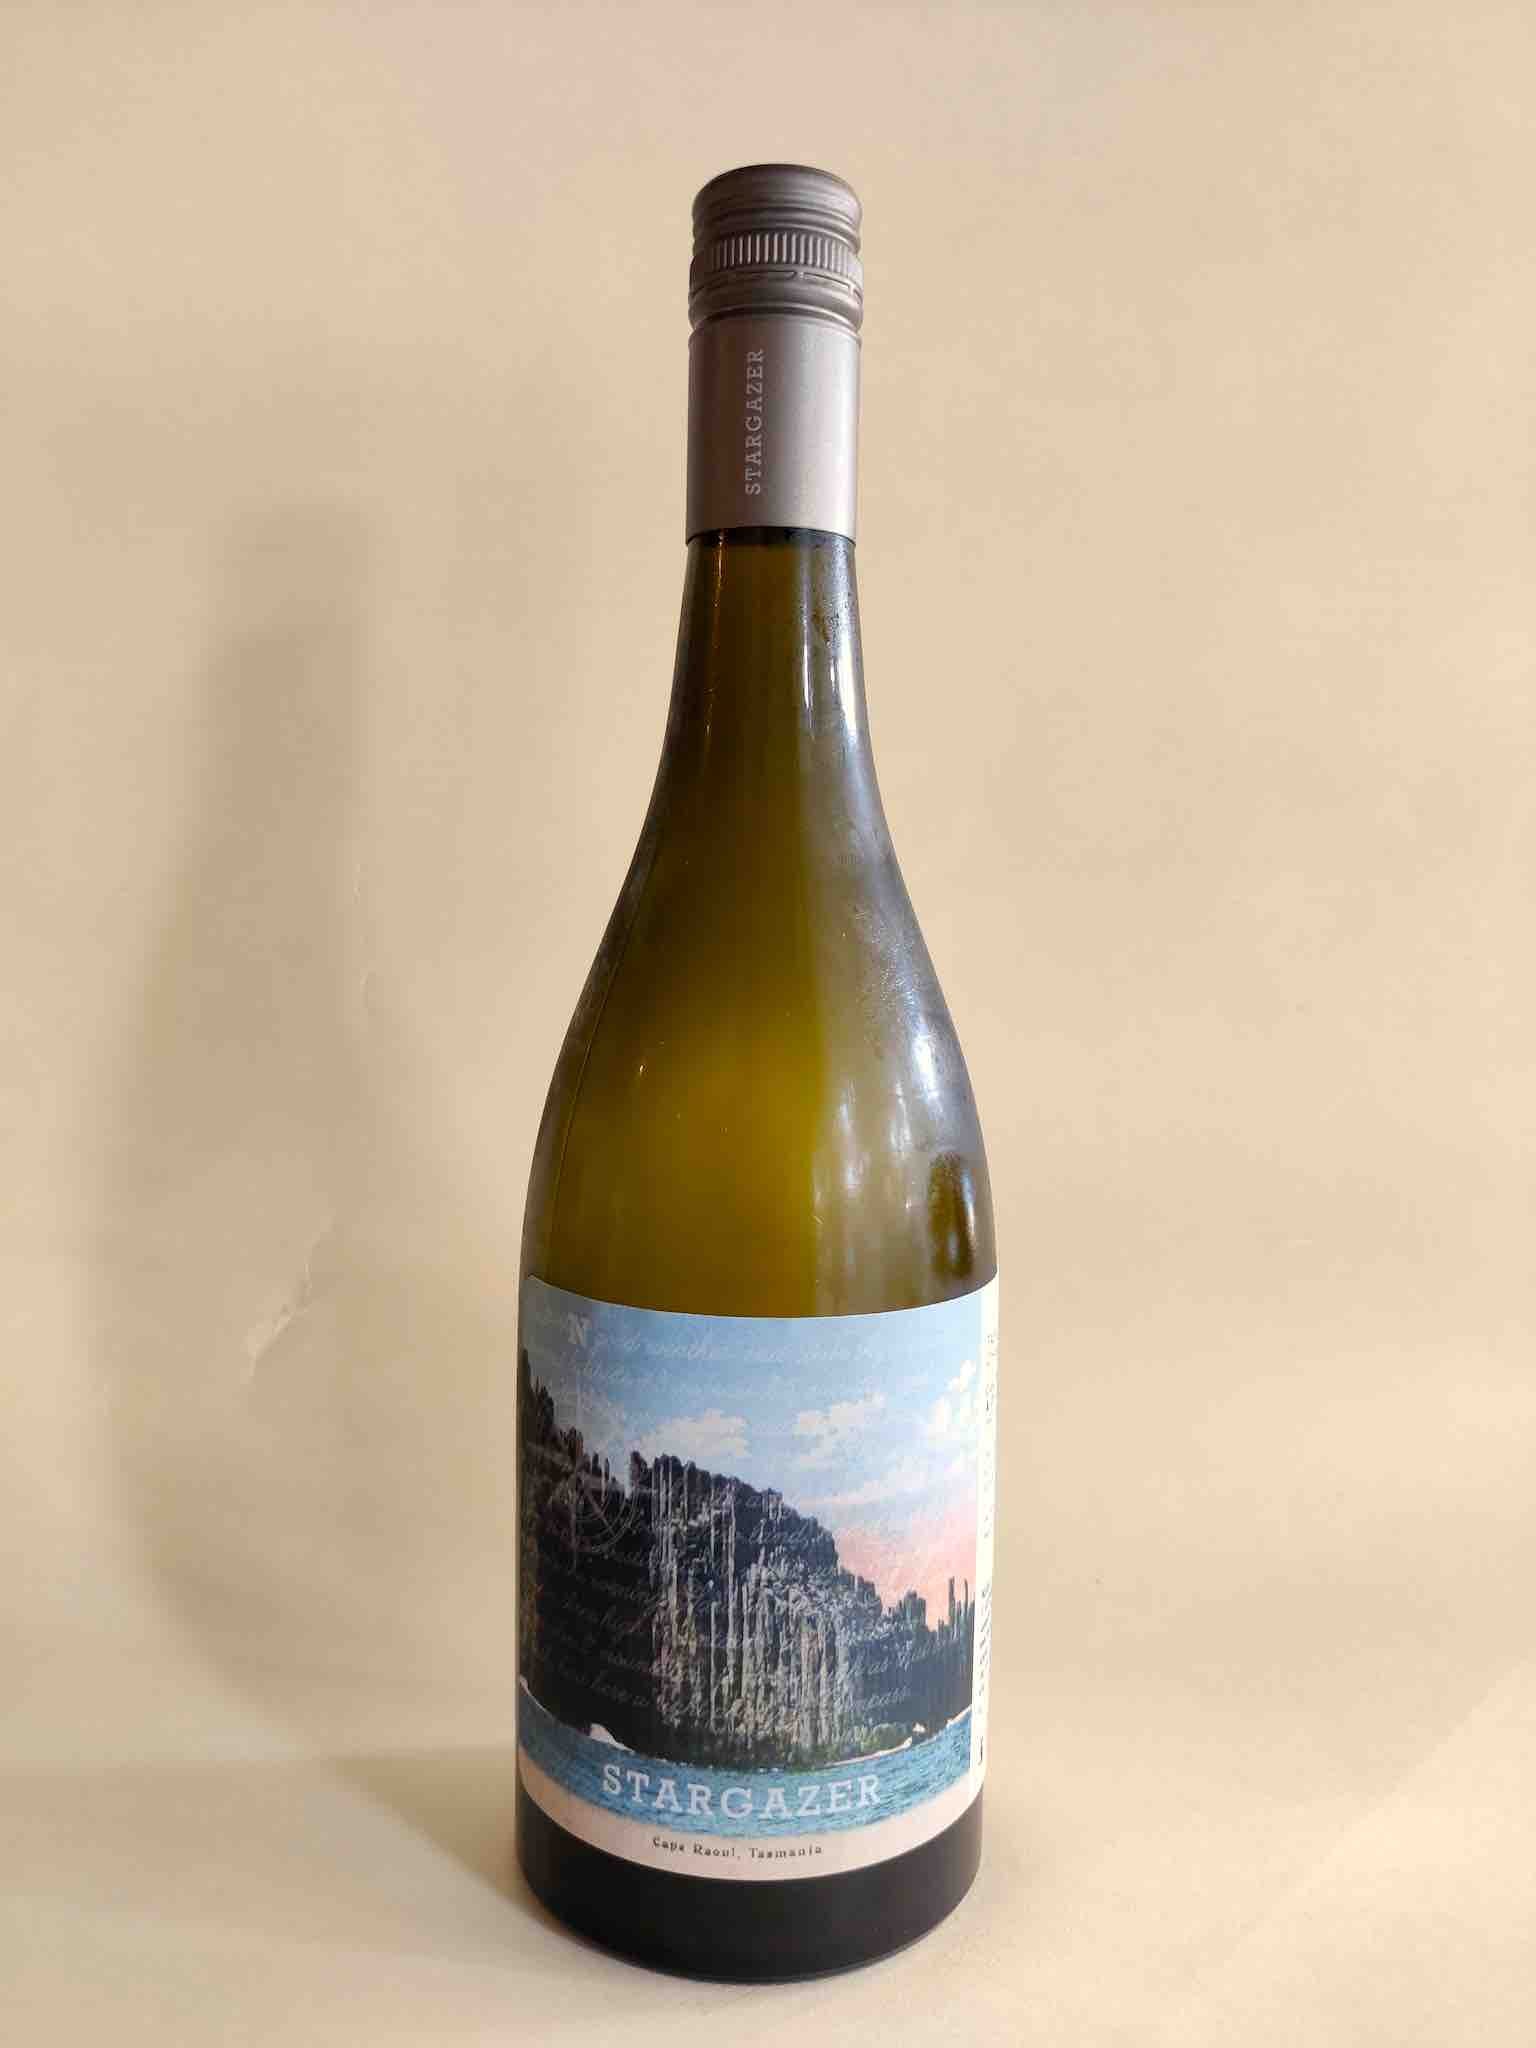 A bottle of 2022 Stargazer Chardonnay from Tasmania.